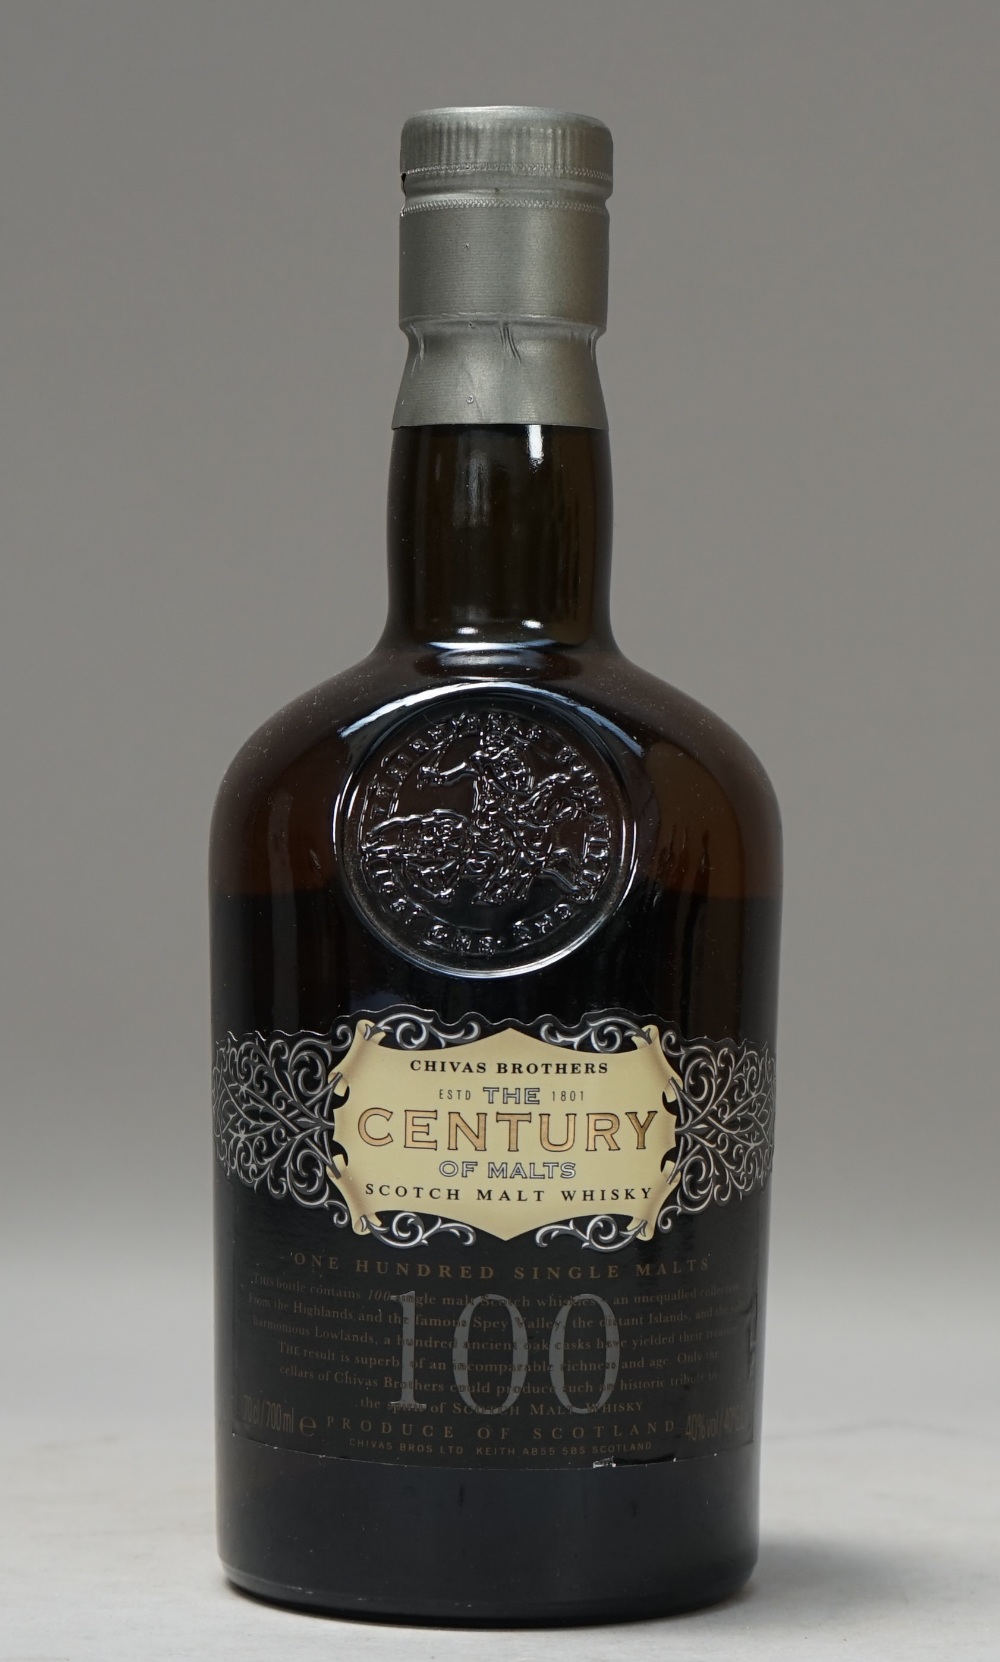 One bottle of Chivas Brothers 'The Century' scotch malt whisky.